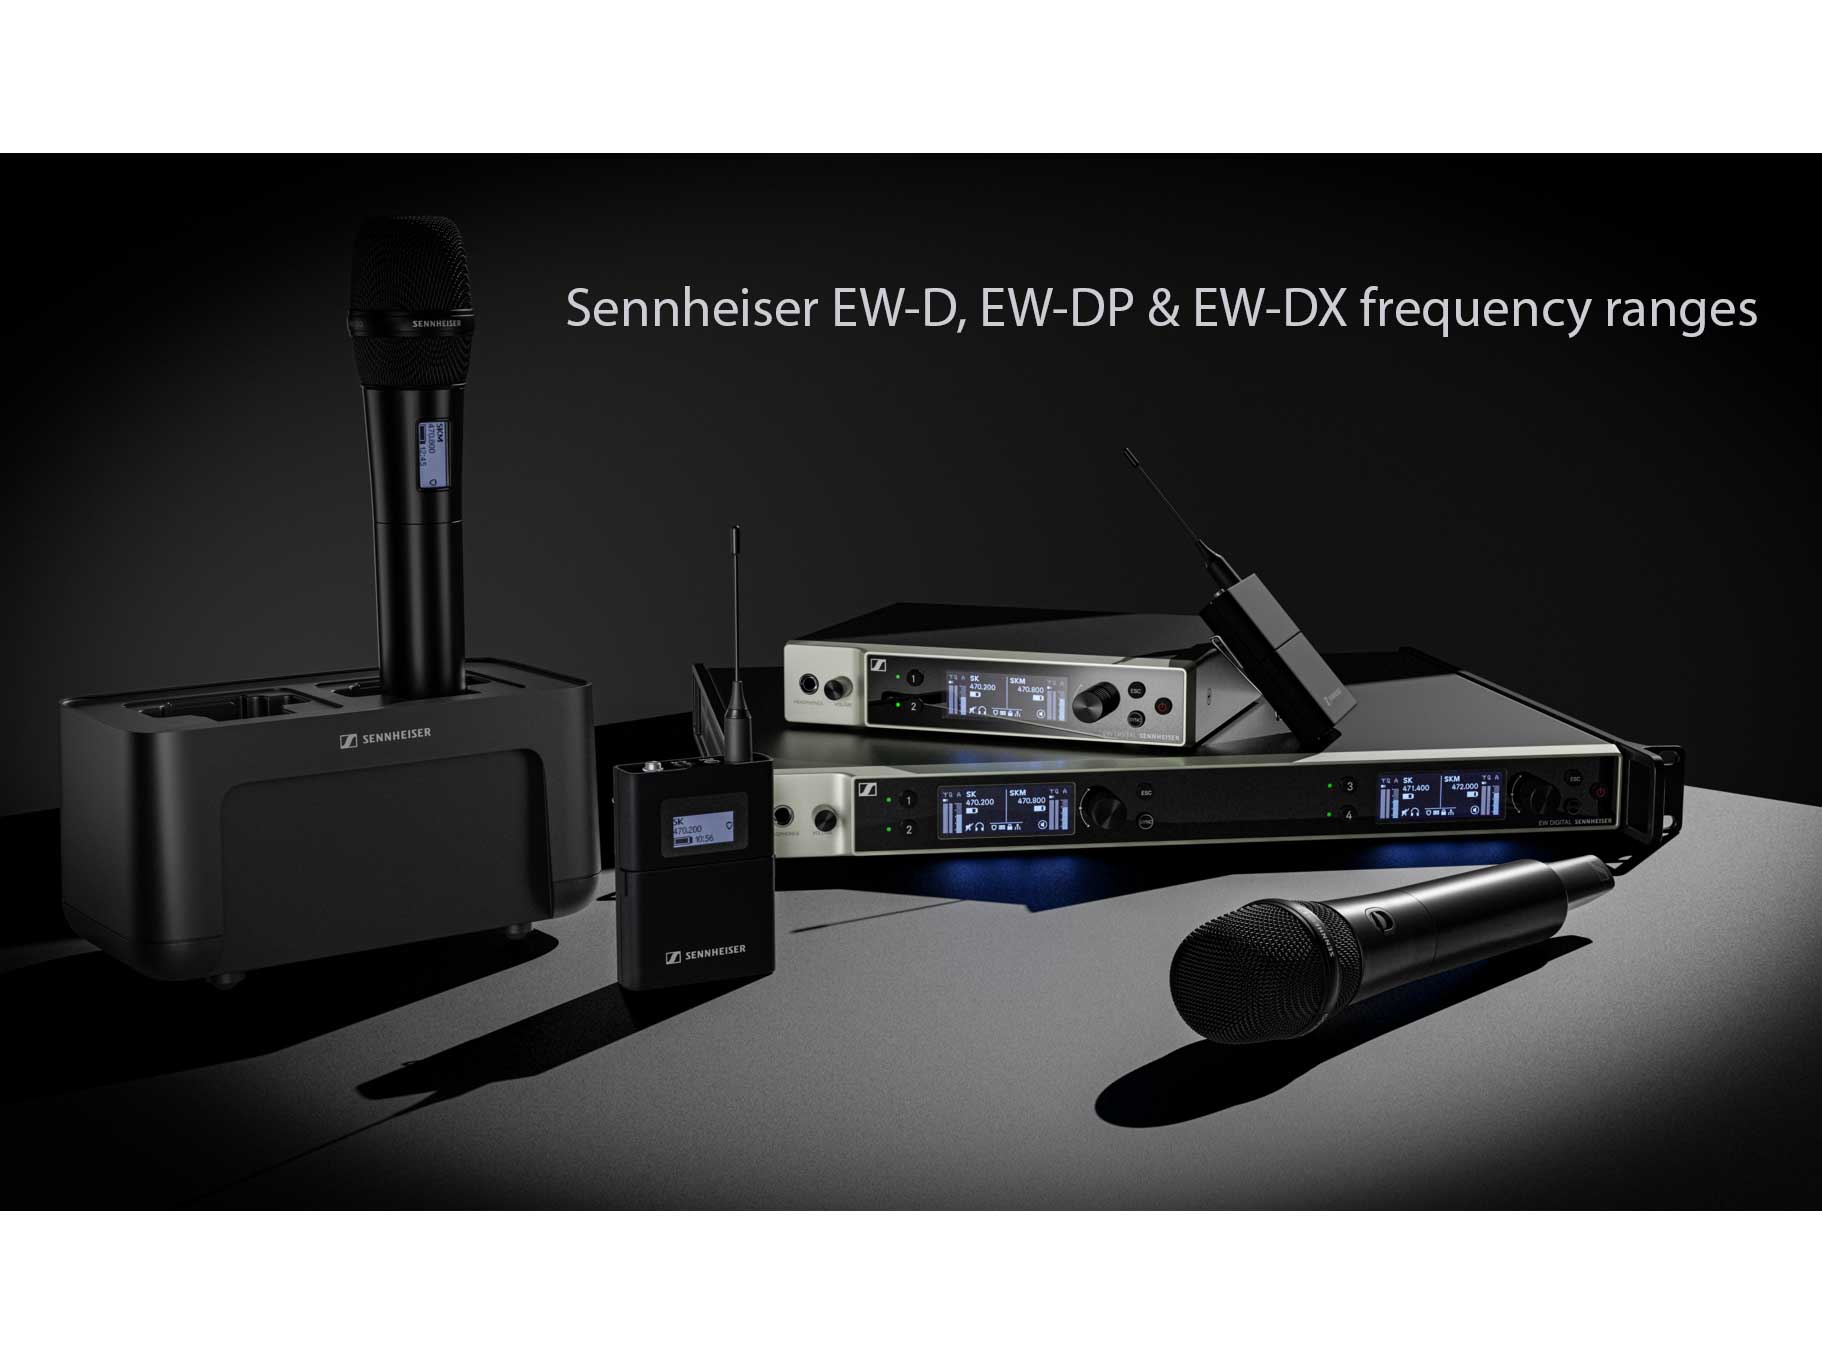 Sennheiser frequency ranges for EW-D, EW-DP & EW-DX wireless systems